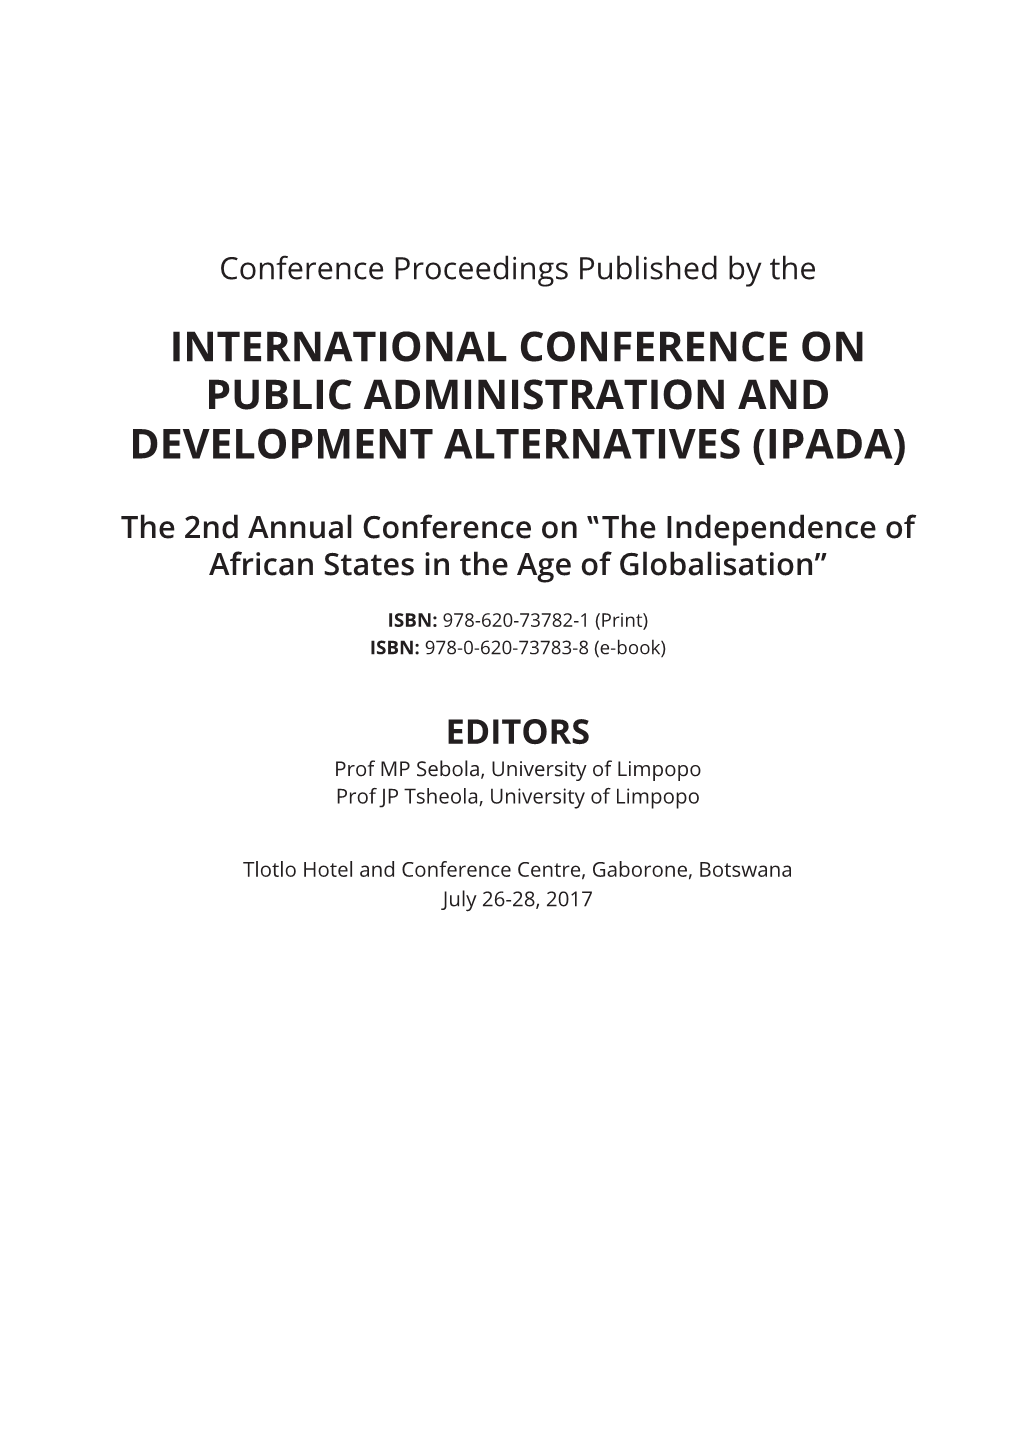 (IPADA) Conference Proceedings 2017